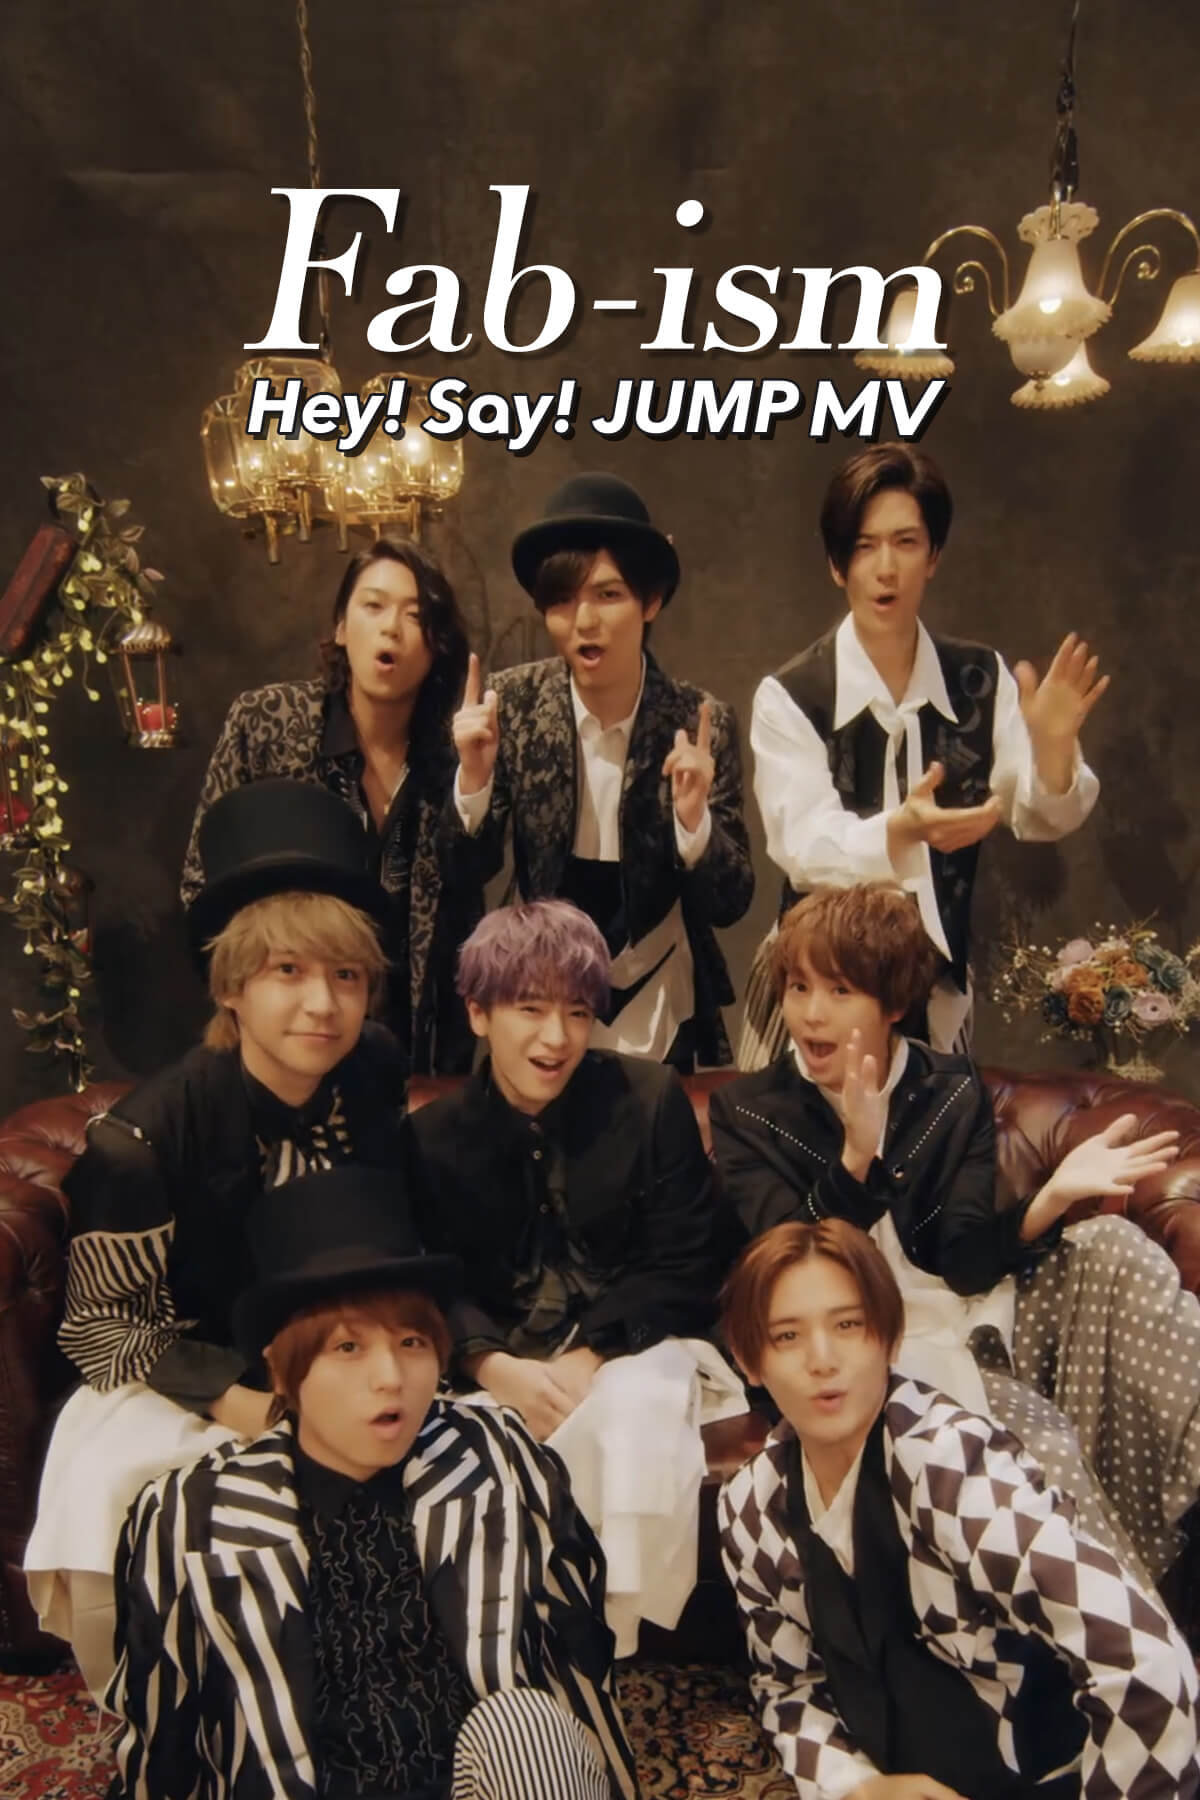 Hey! Say! JUMP MV - Fab-ism